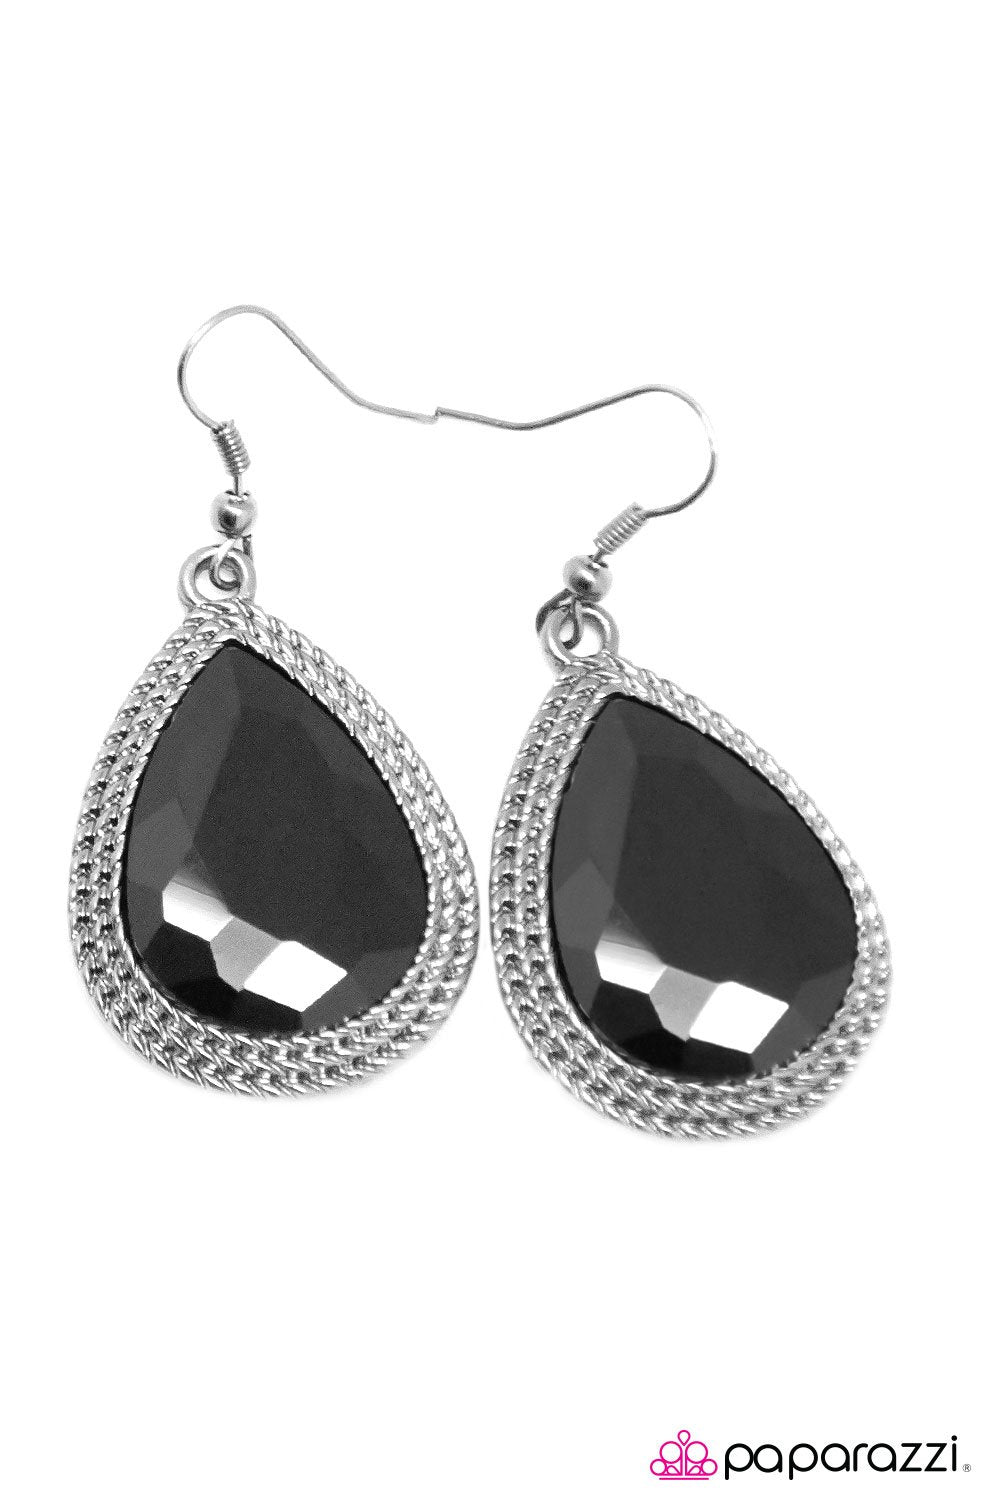 Next In Line Black Teardrop Earrings - Paparazzi Accessories - lightbox -CarasShop.com - $5 Jewelry by Cara Jewels